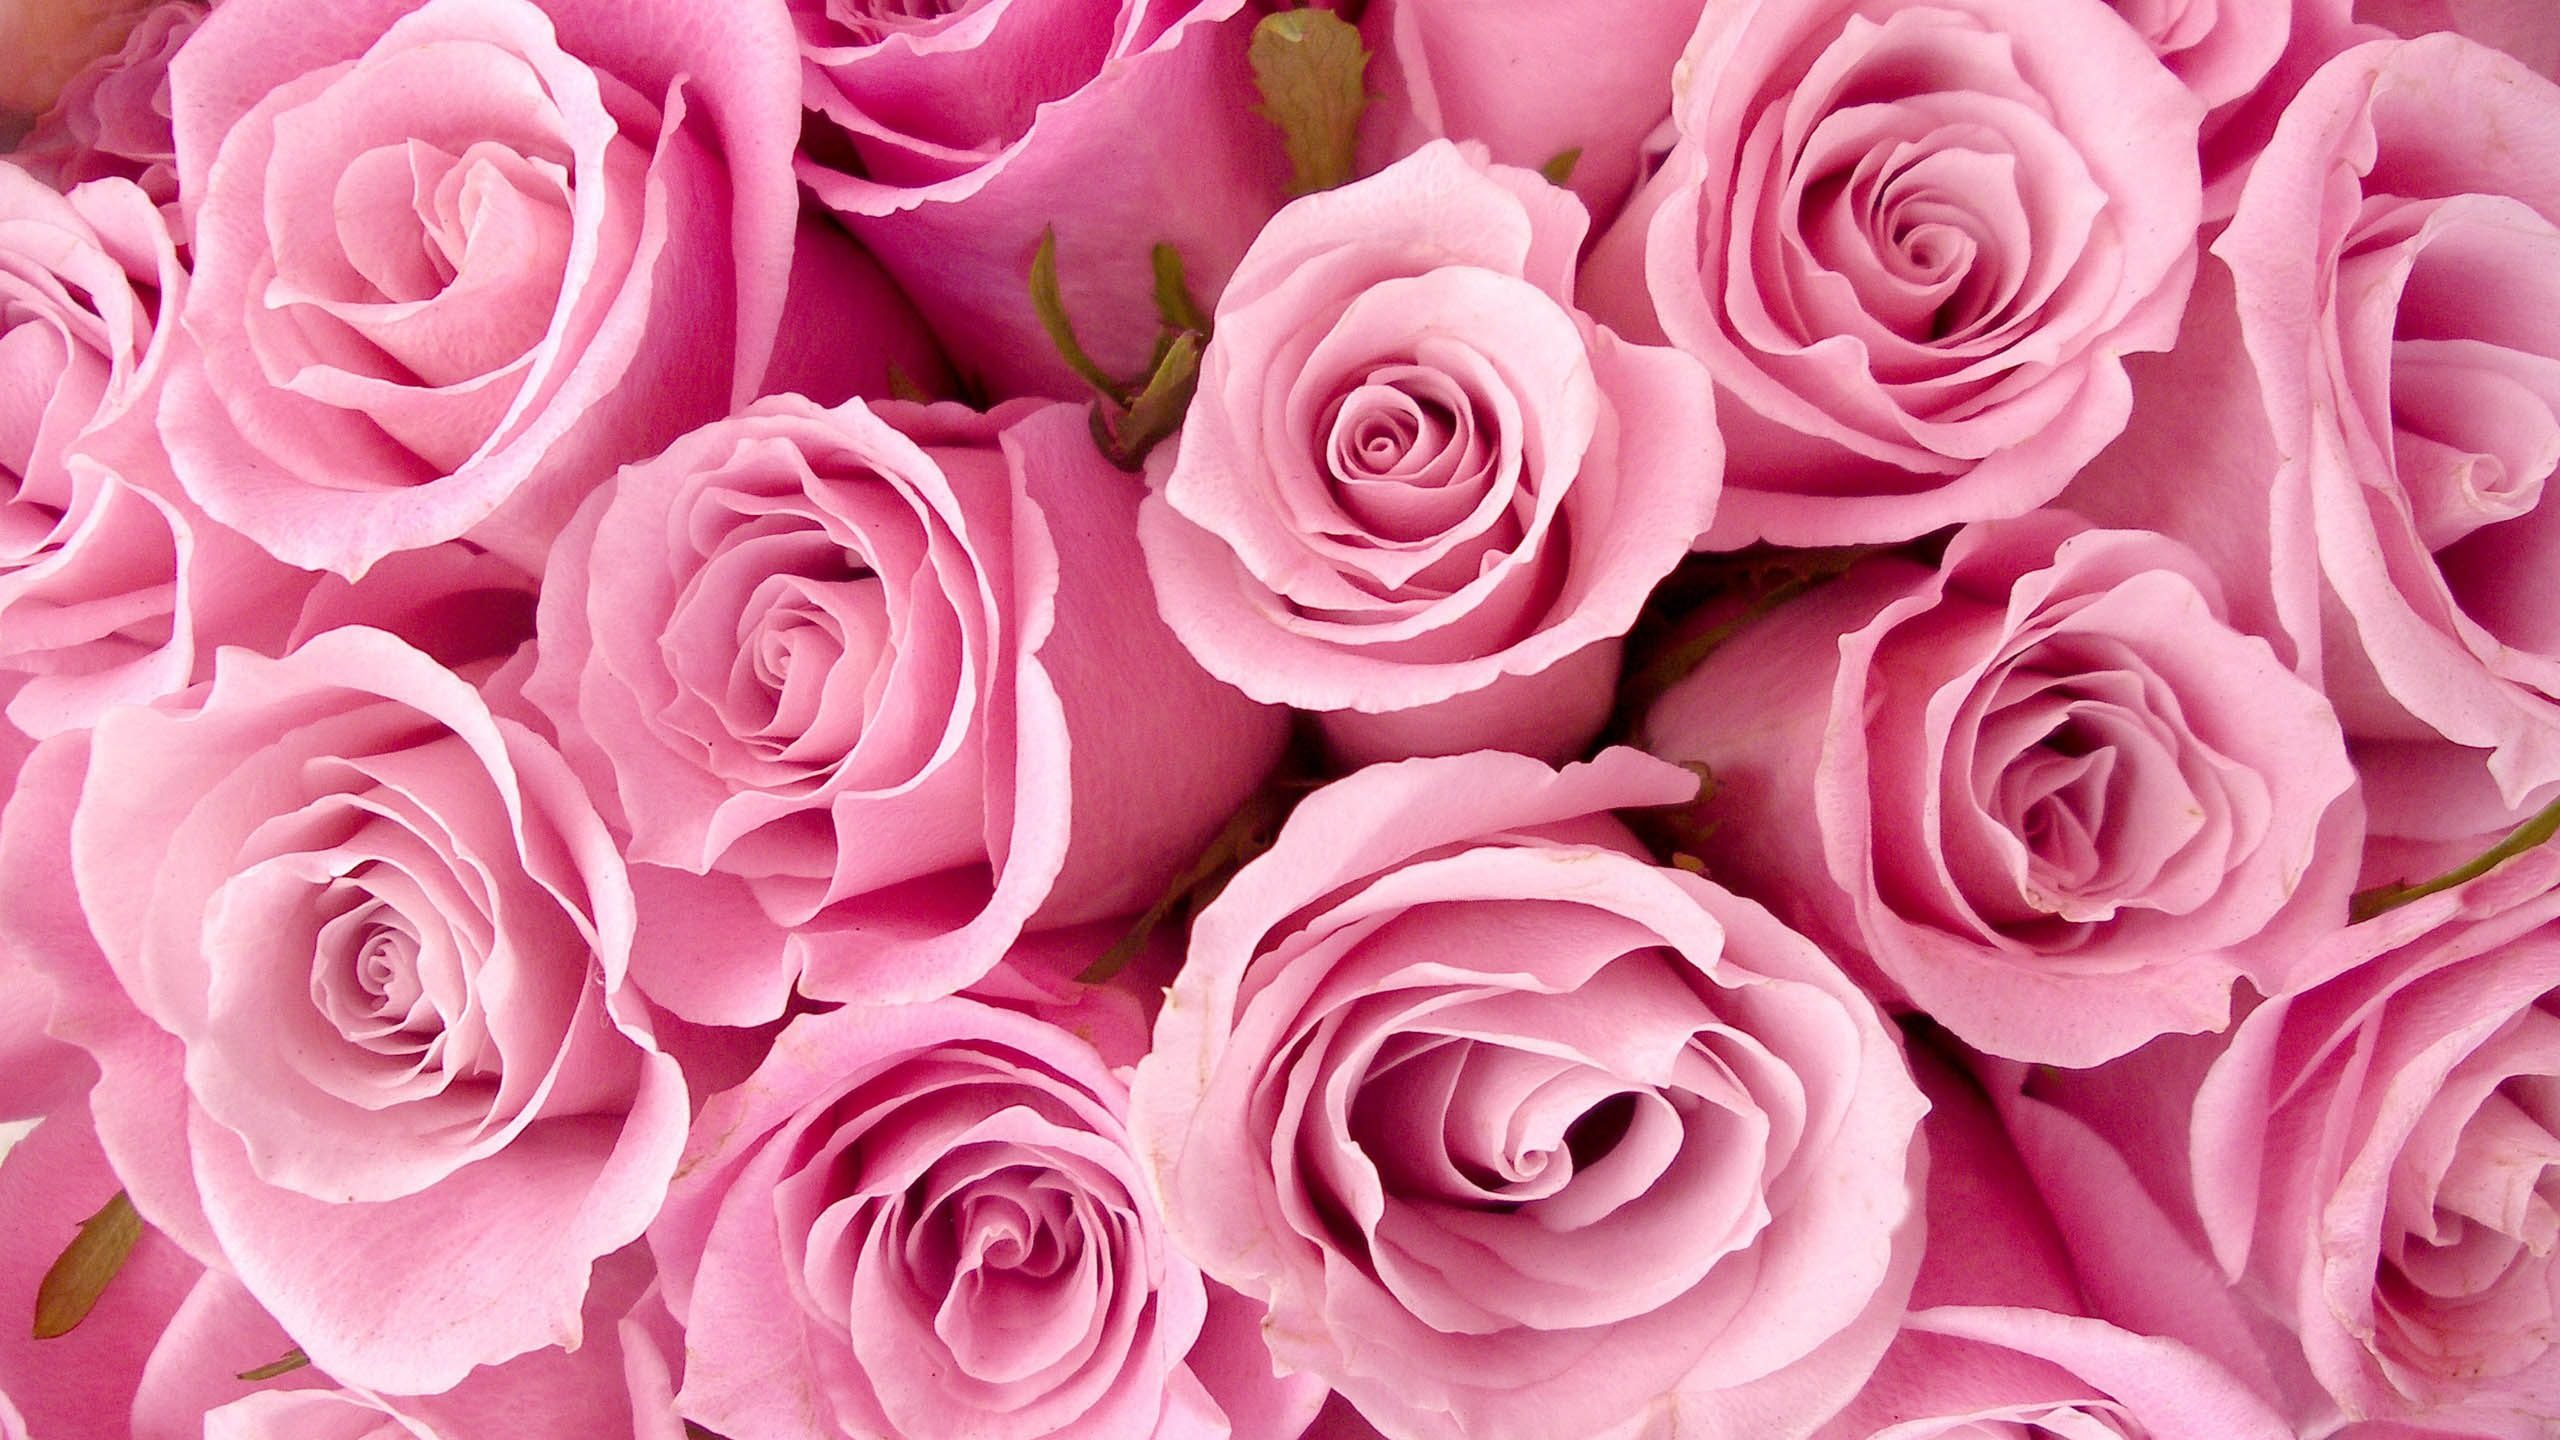 pink flower wallpaper hd,flower,garden roses,rose,pink,floribunda